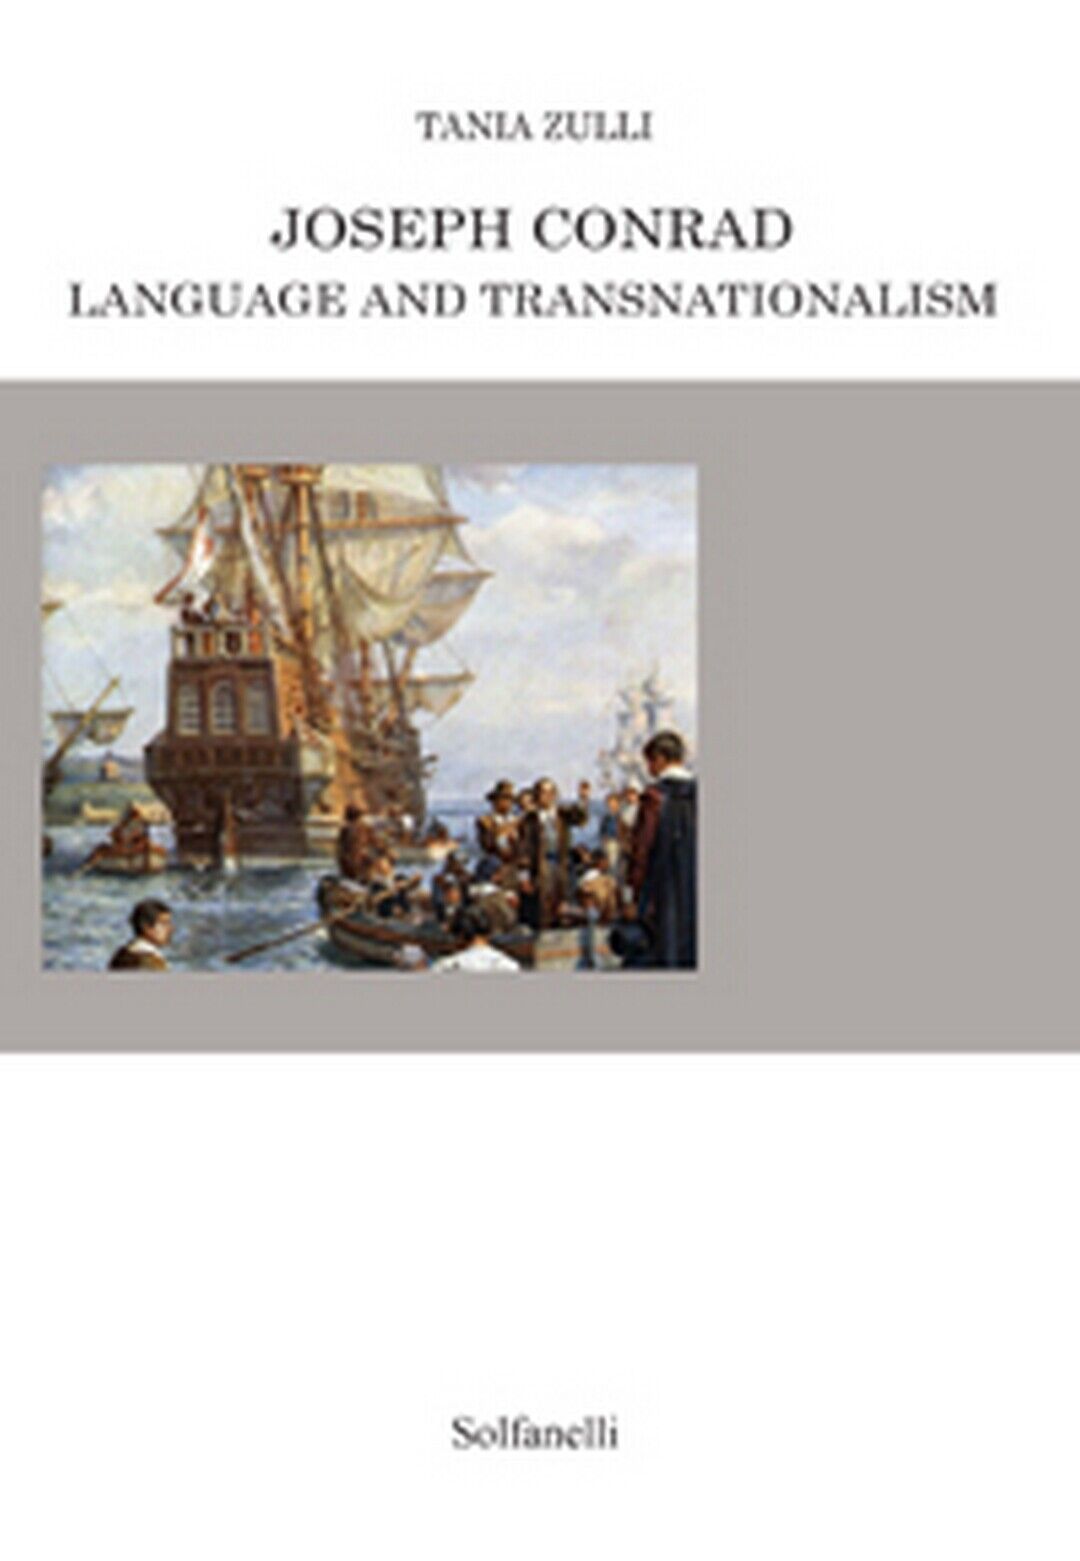 JOSEPH CONRAD LANGUAGE AND TRANSNATIONALISM, Tania Zulli,  Solfanelli Edizioni